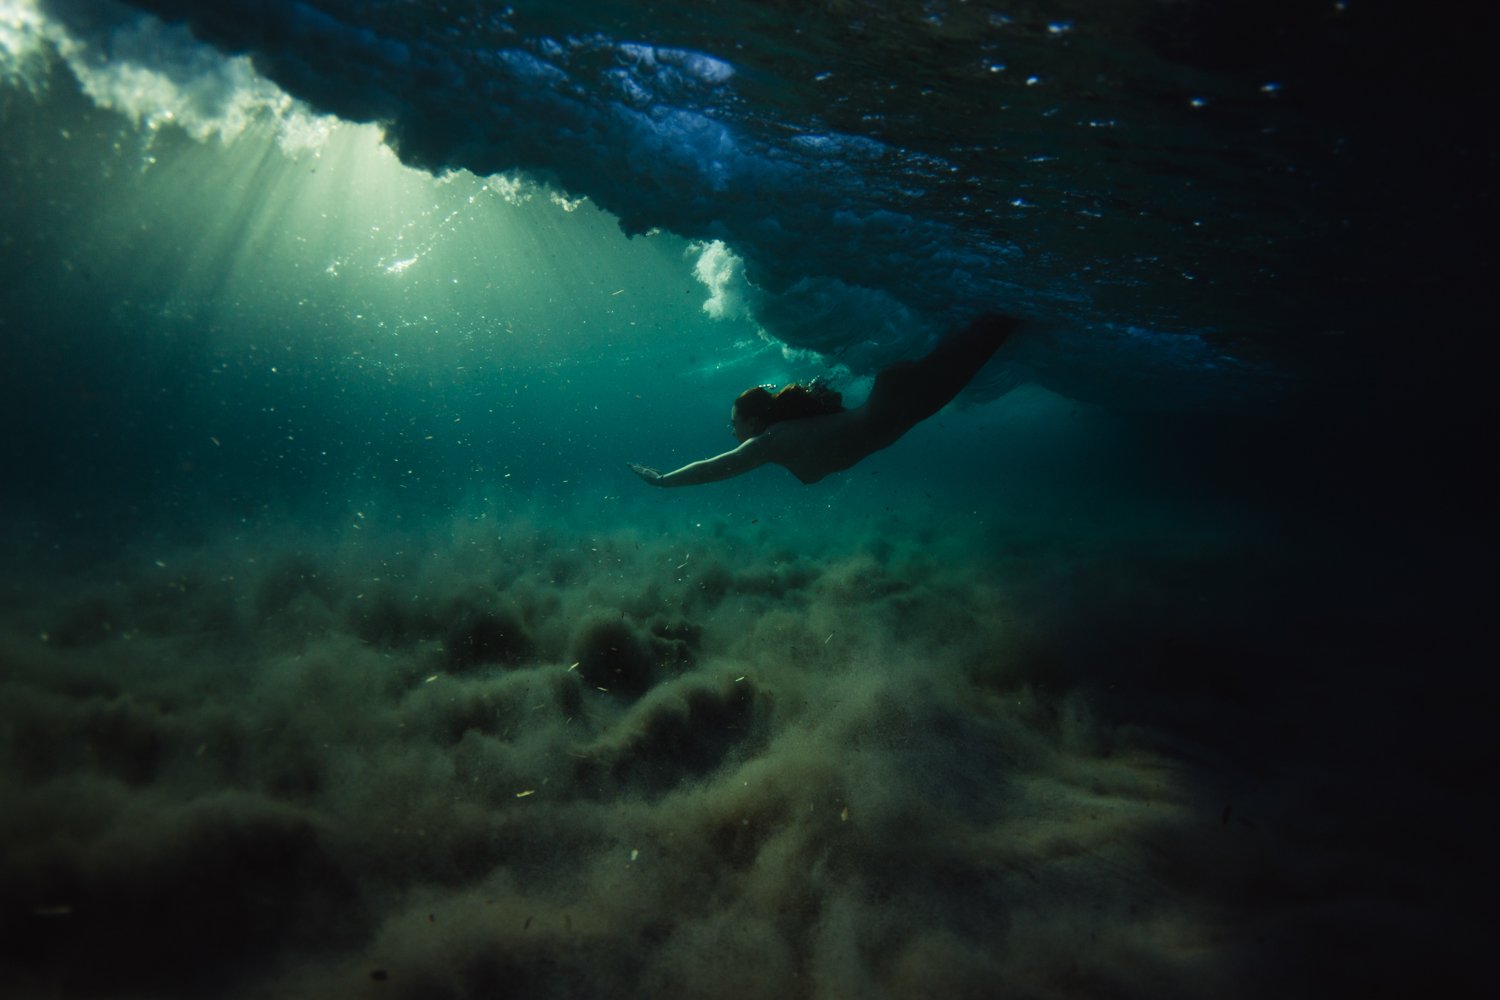 underwater corse corsica sea mediterranean island france french photographer photographe ajaccio Krista Espino Capo di feno wave nude nue femme woman fine art photography-55.jpg